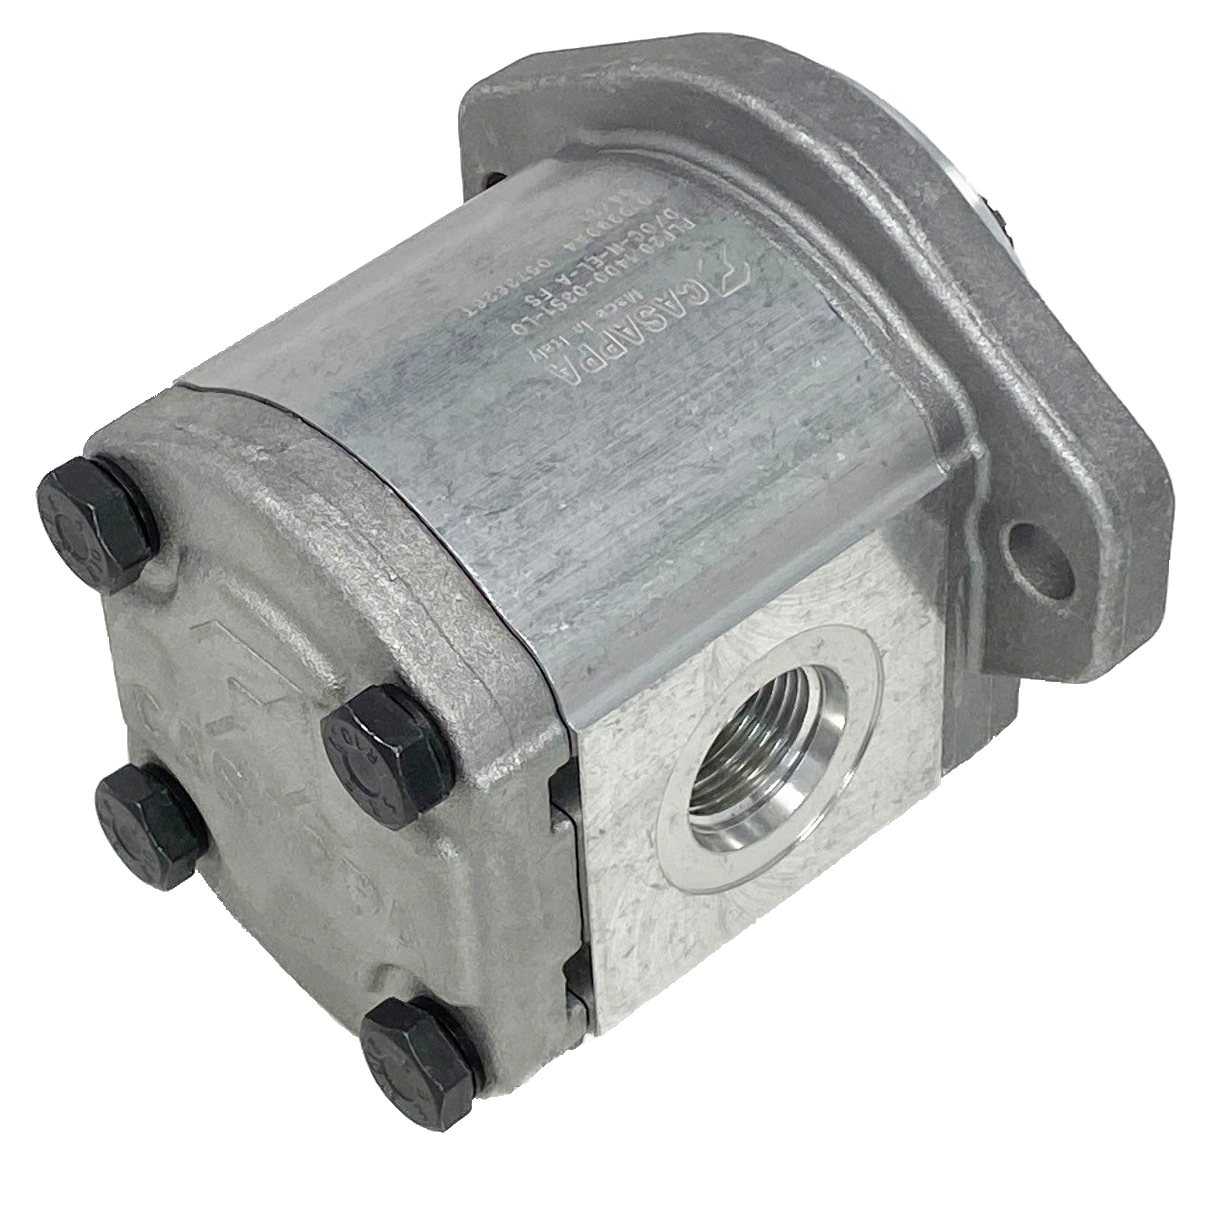 PLM20.16R0-03S1-LOC/OD-N-EL : Casappa Polaris Gear Motor, 16.85cc, 3625psi Rated, 3000RPM, Reversible Rear External Drain, 9T 16/32dp Shaft, SAE A 2-Bolt Flange, 0.625 (5/8") #10 SAE Inlet, 0.75 (3/4") #12 SAE Outlet, Aluminum Body & Flange